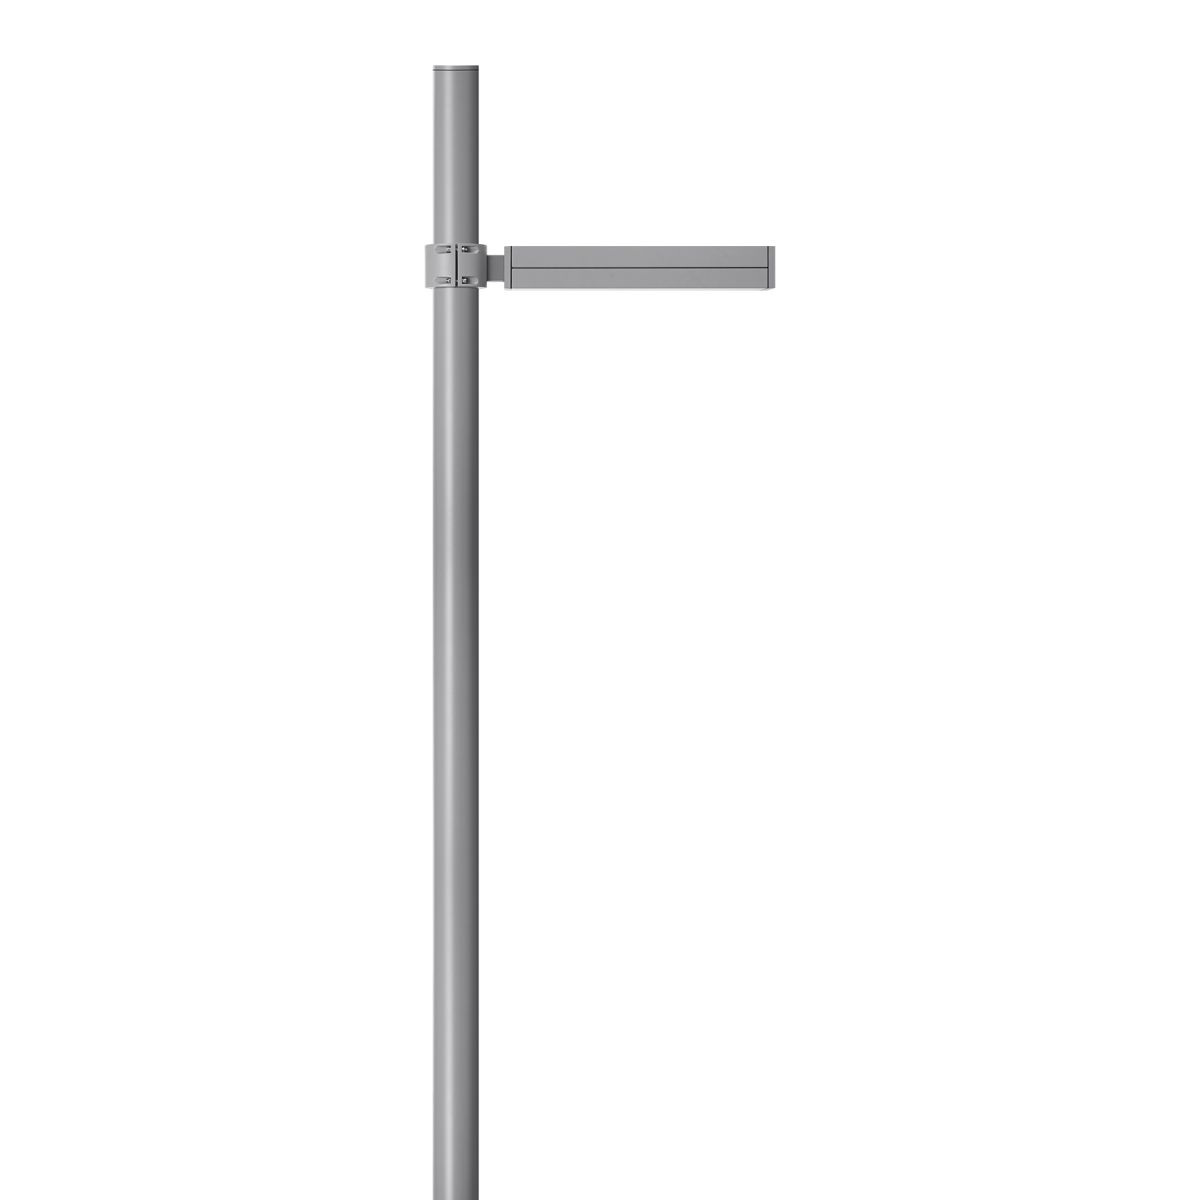 Neo EQUINOX - Pole Clamp / Single Sided